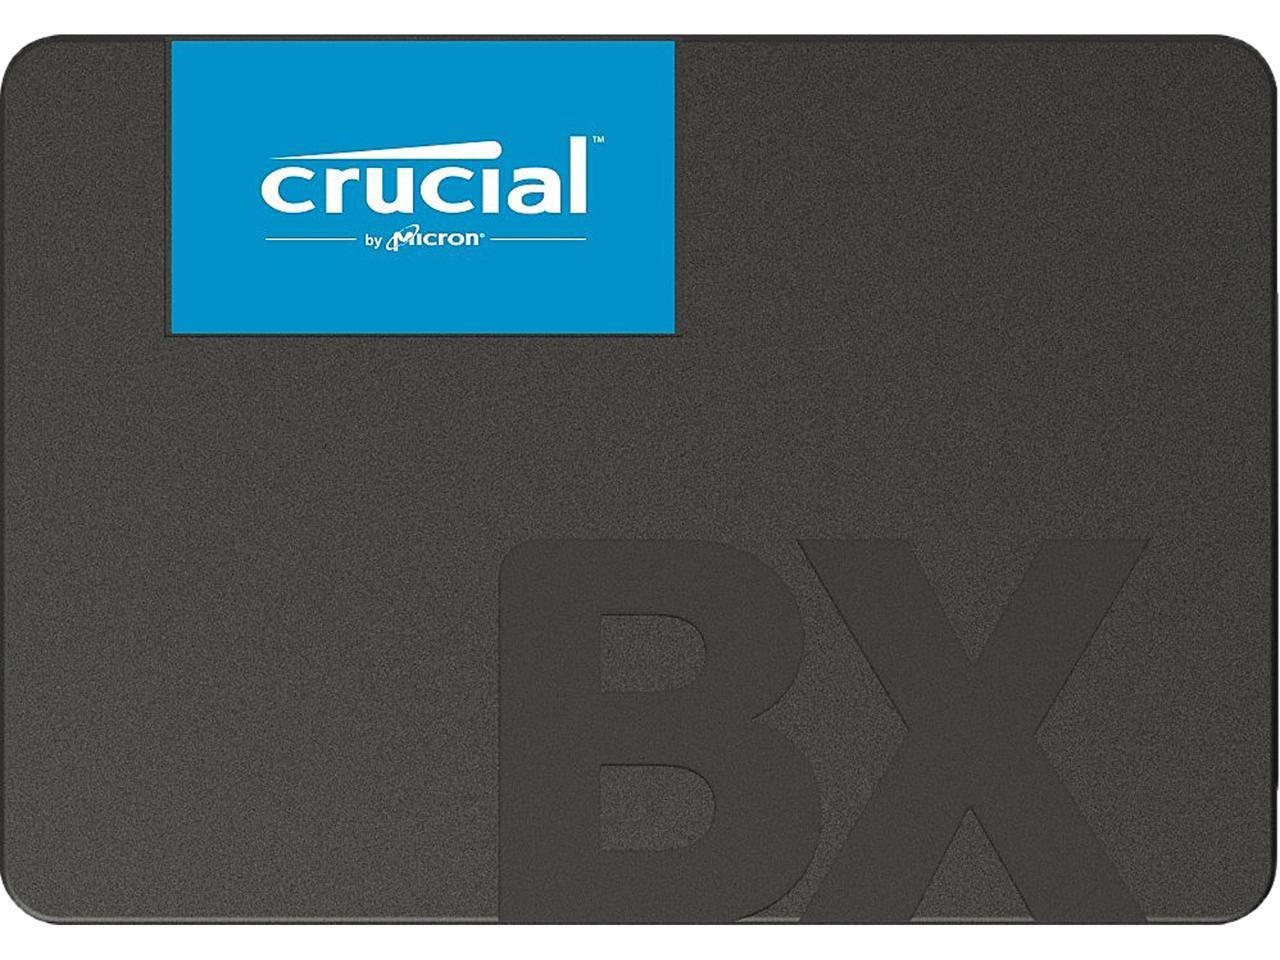 Crucial BX500 1TB 3D Nand Sata 2.5-Inch Internal SSD